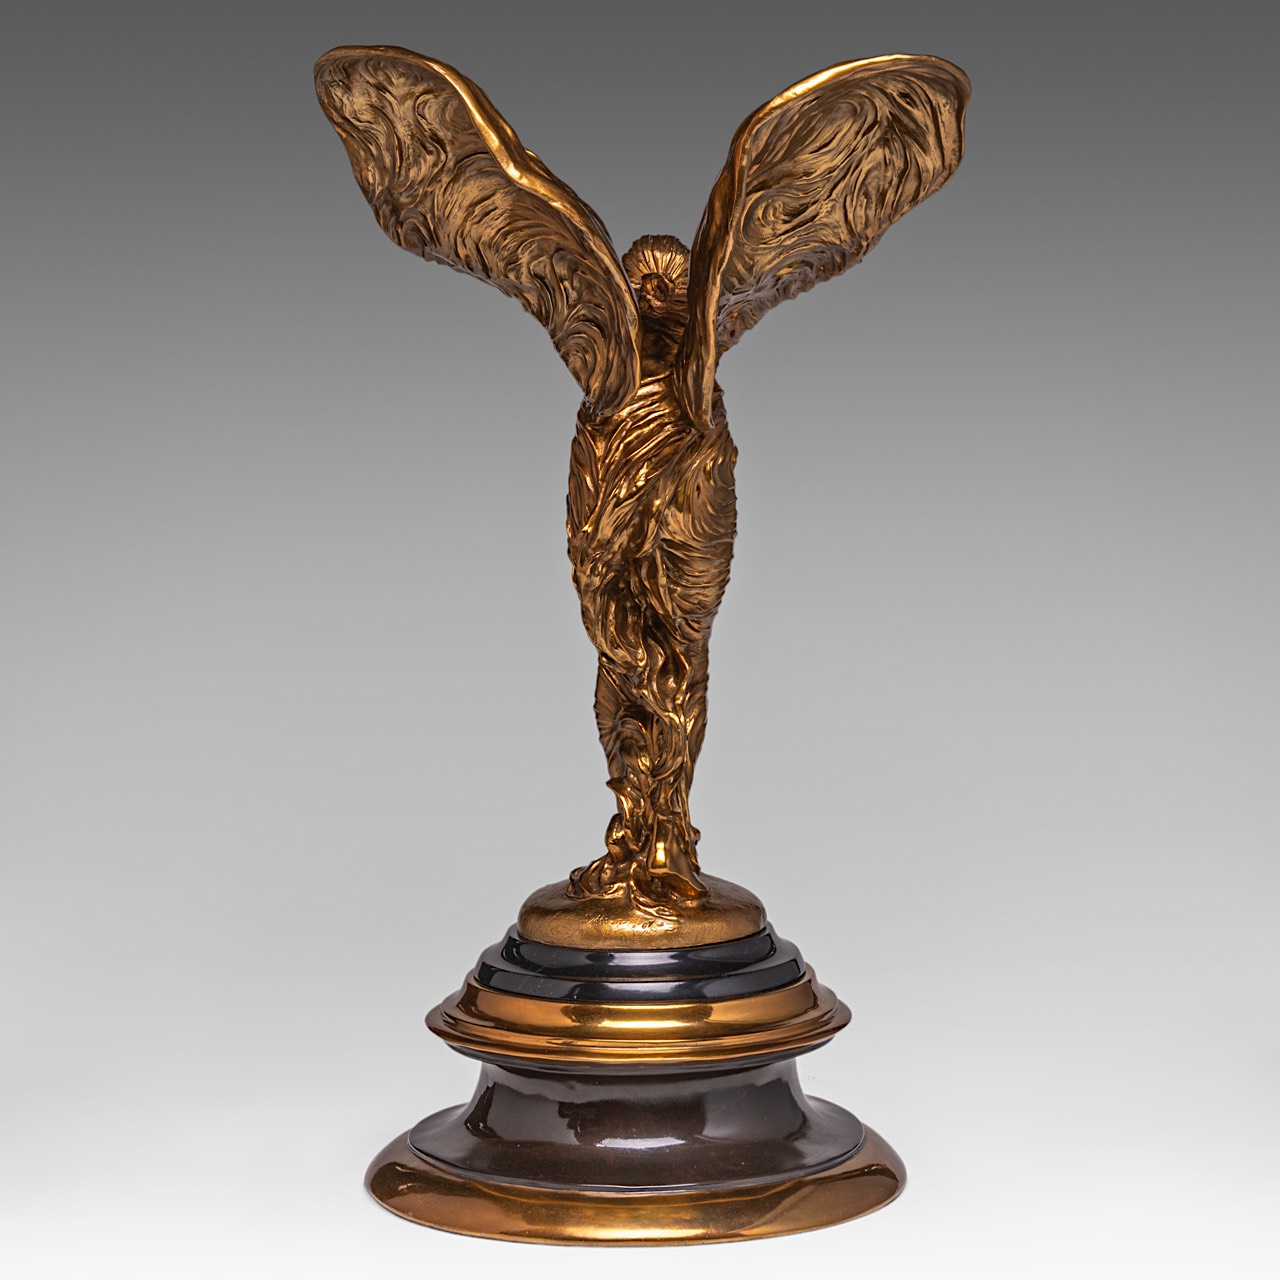 Charles Sykes (1875-1950), gilt bronze sculpture of the 'Spirit of Ecstasy', Rolls-Royce, H 69 cm - Image 12 of 14